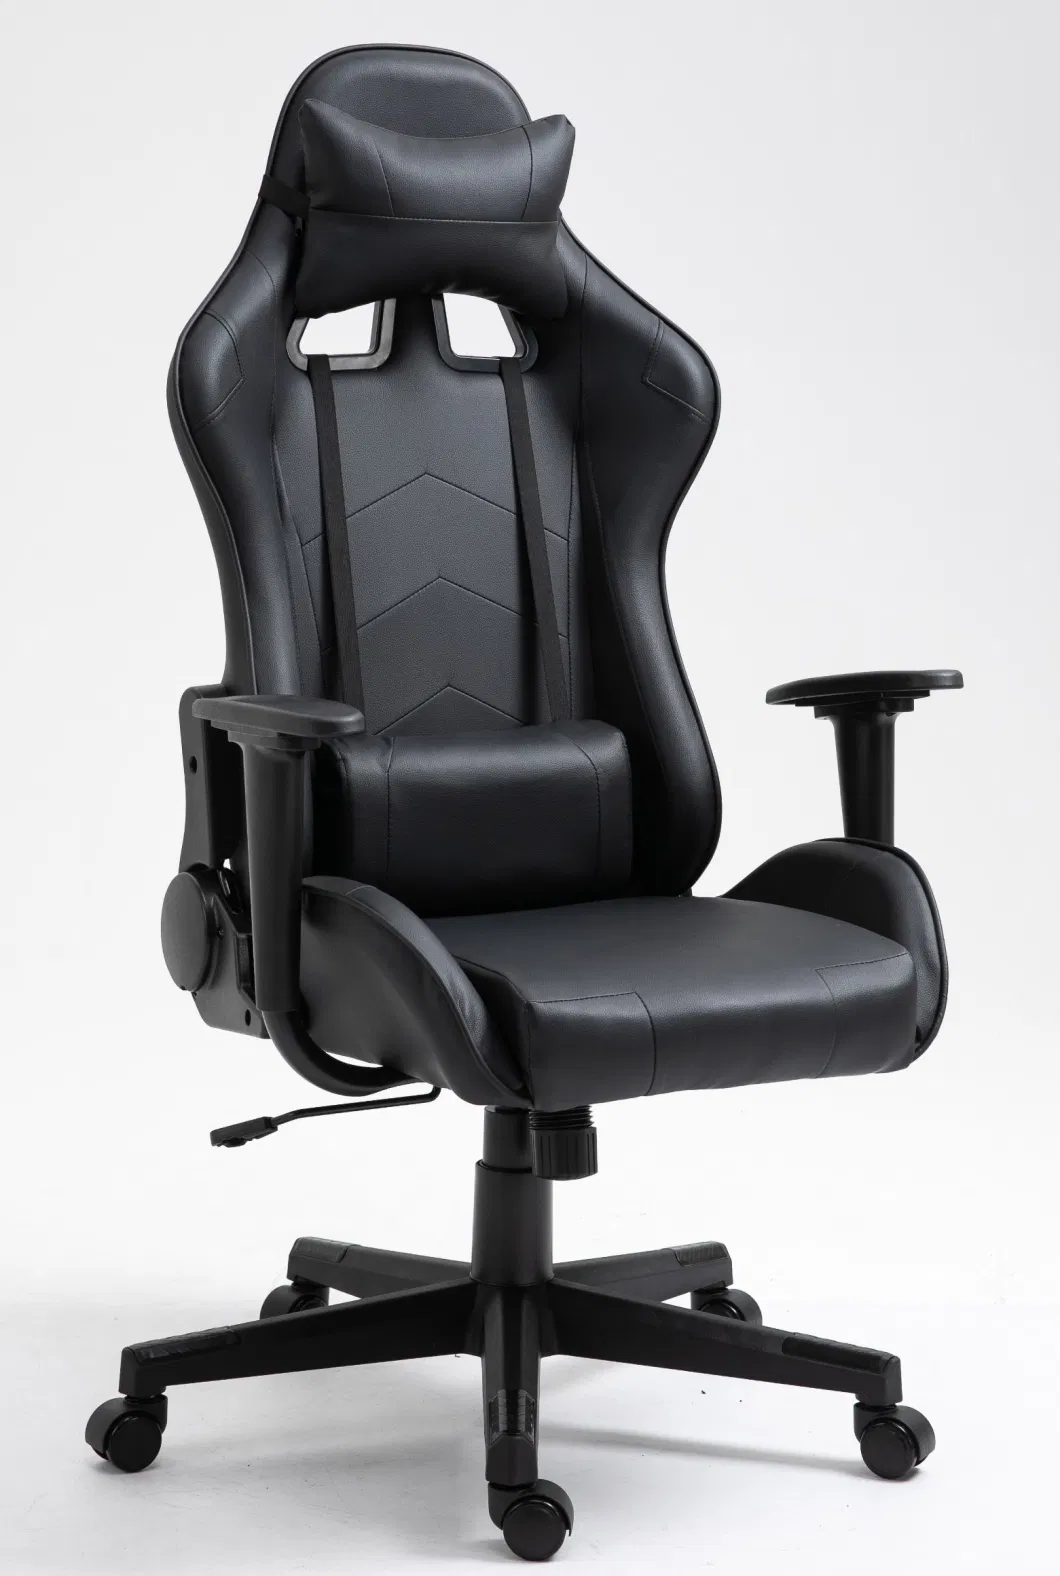 Orange Gaming Chair Nice Price Anji Factory Ergonomics Sillas Chair Racing Chair Office Chair